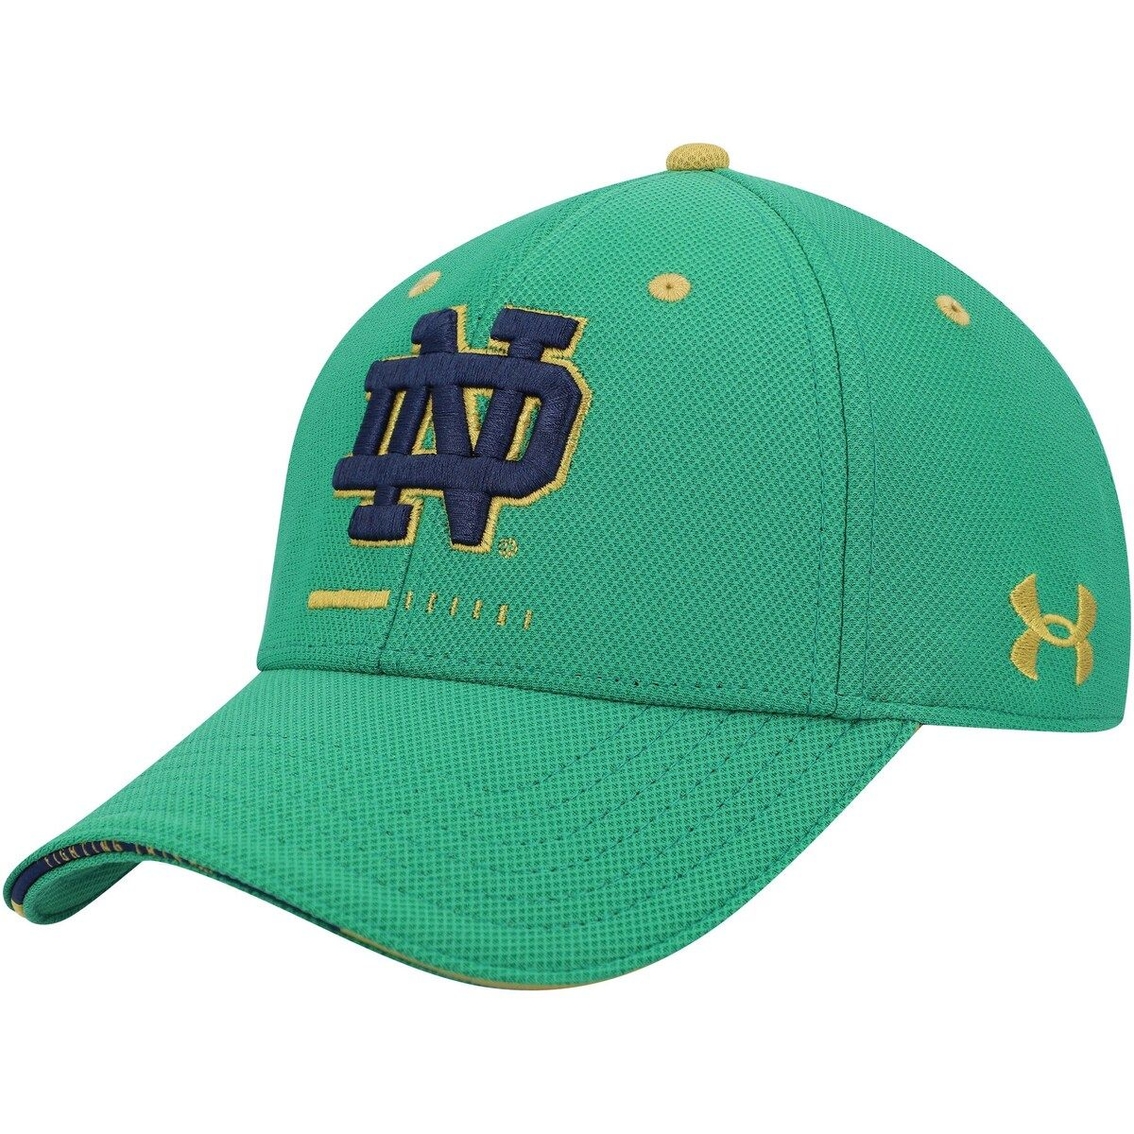 Under Armour Men's Green Notre Dame Fighting Irish Blitzing Accent  Performance Flex Hat, Fan Shop